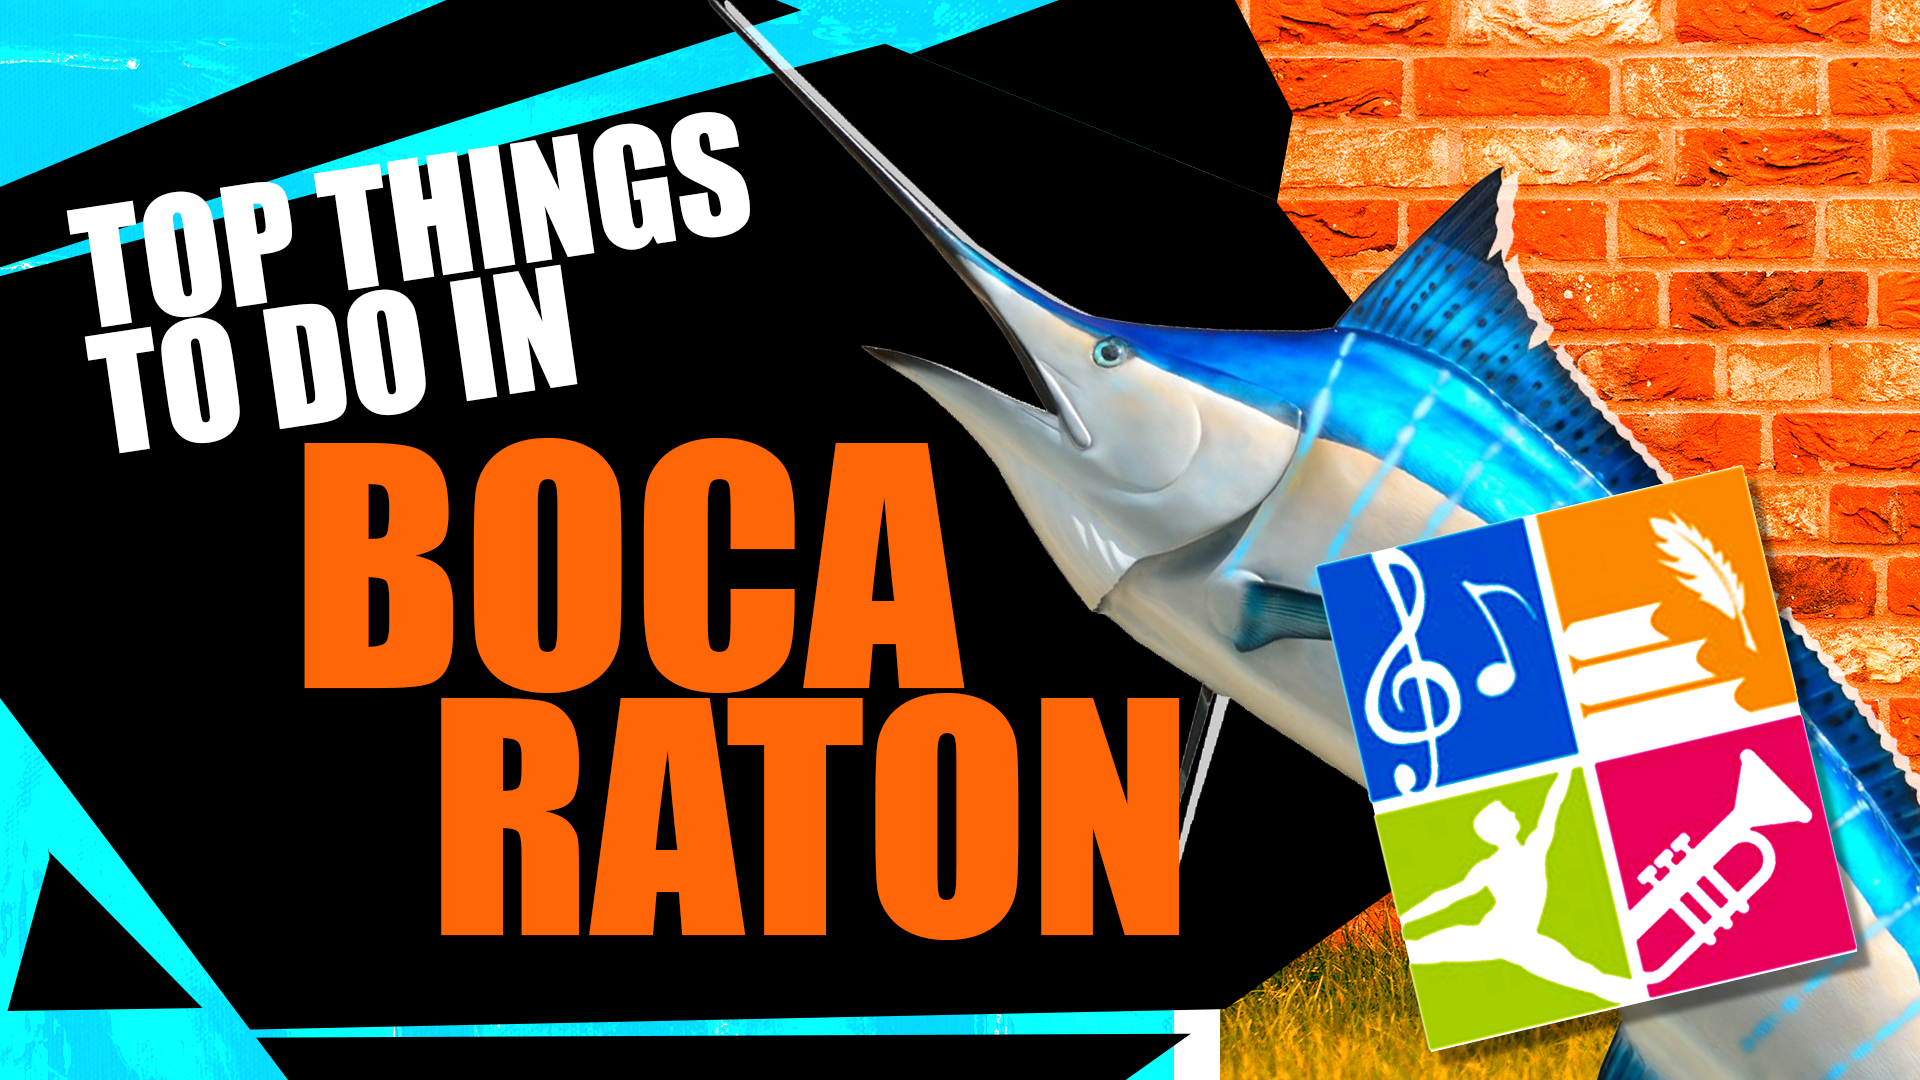 Boca Raton Events for 2020 Boca Raton Festivals